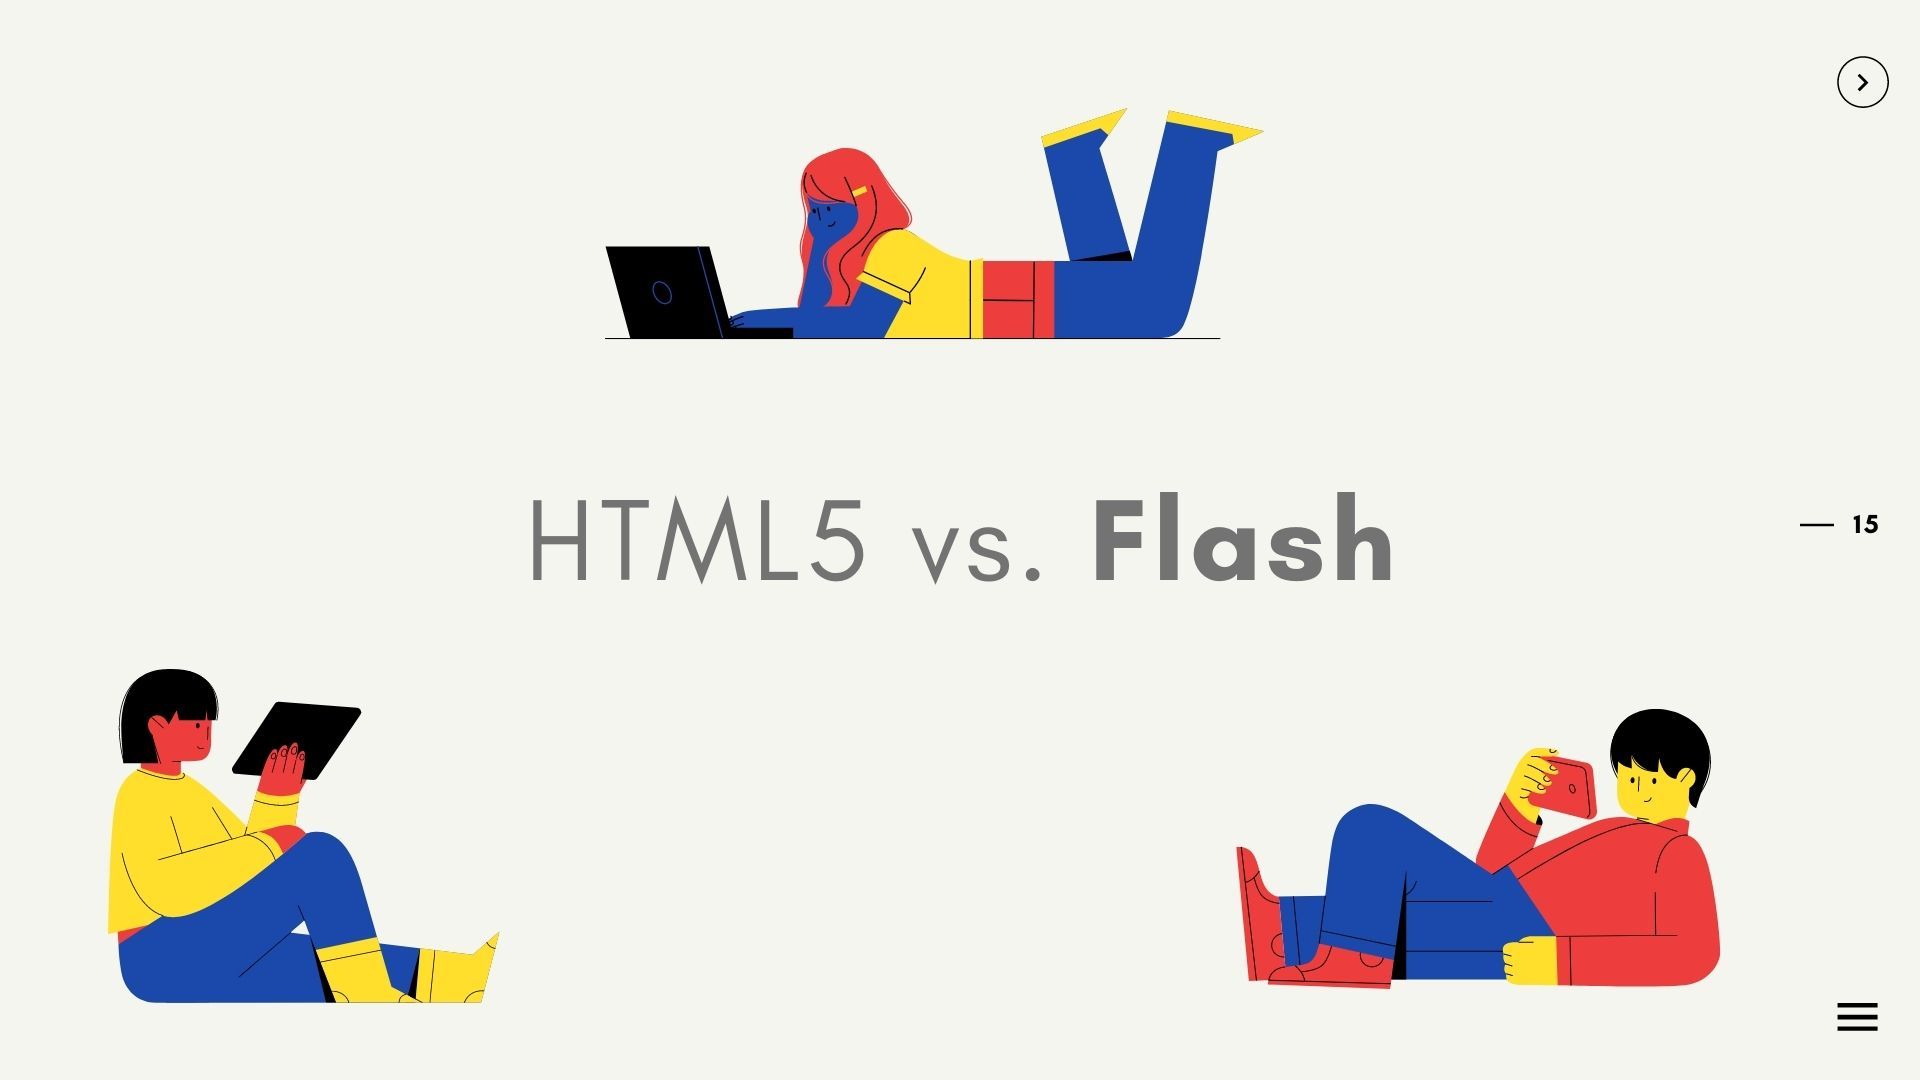 HTML5 vs. Flash